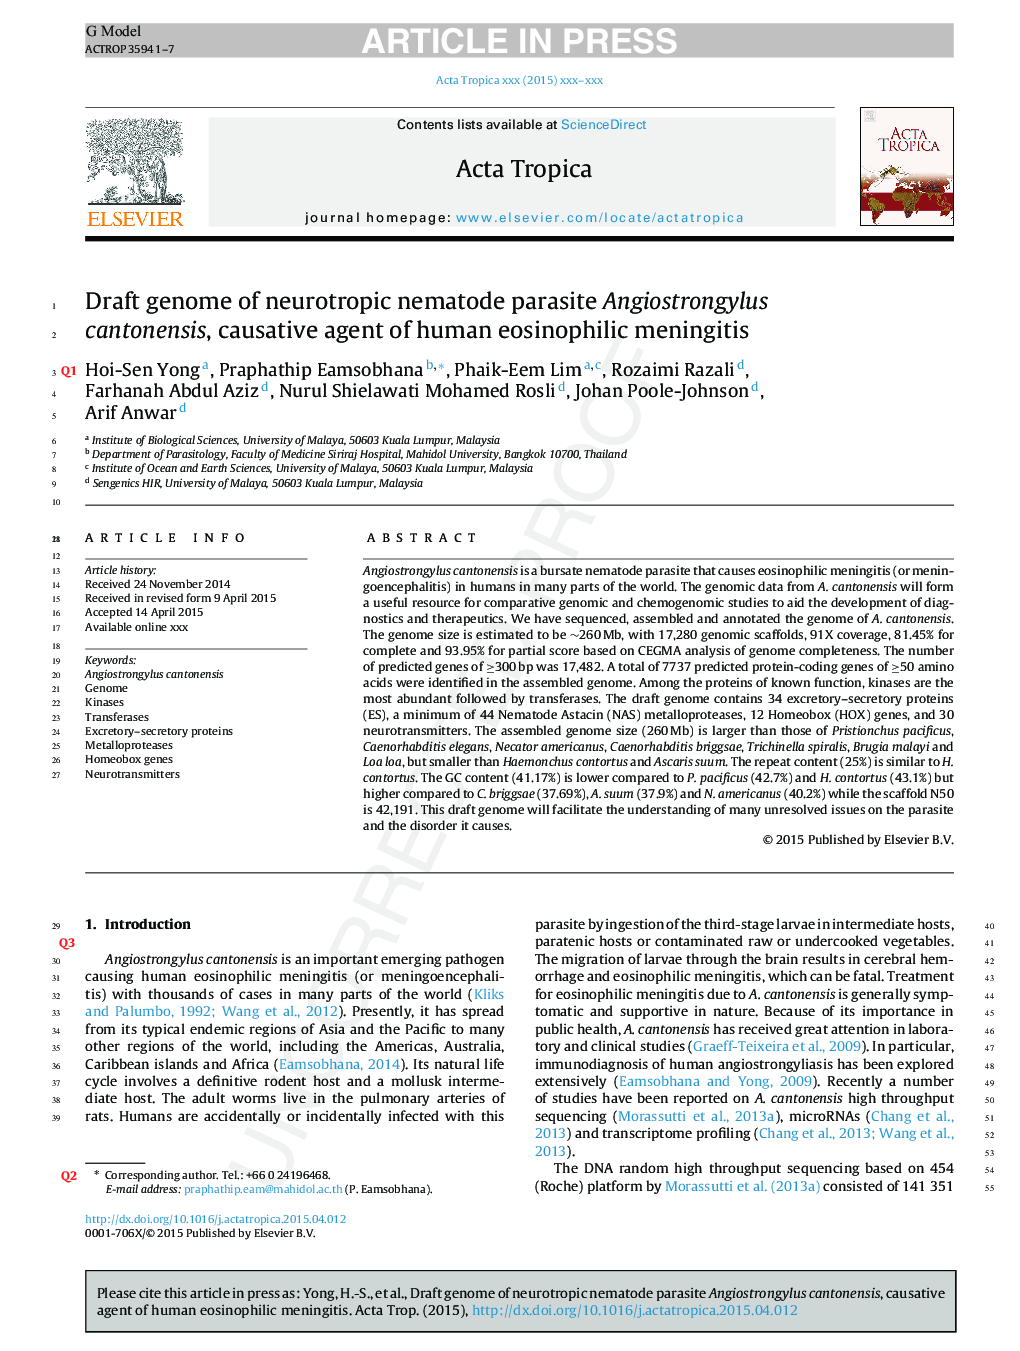 Draft genome of neurotropic nematode parasite Angiostrongylus cantonensis, causative agent of human eosinophilic meningitis